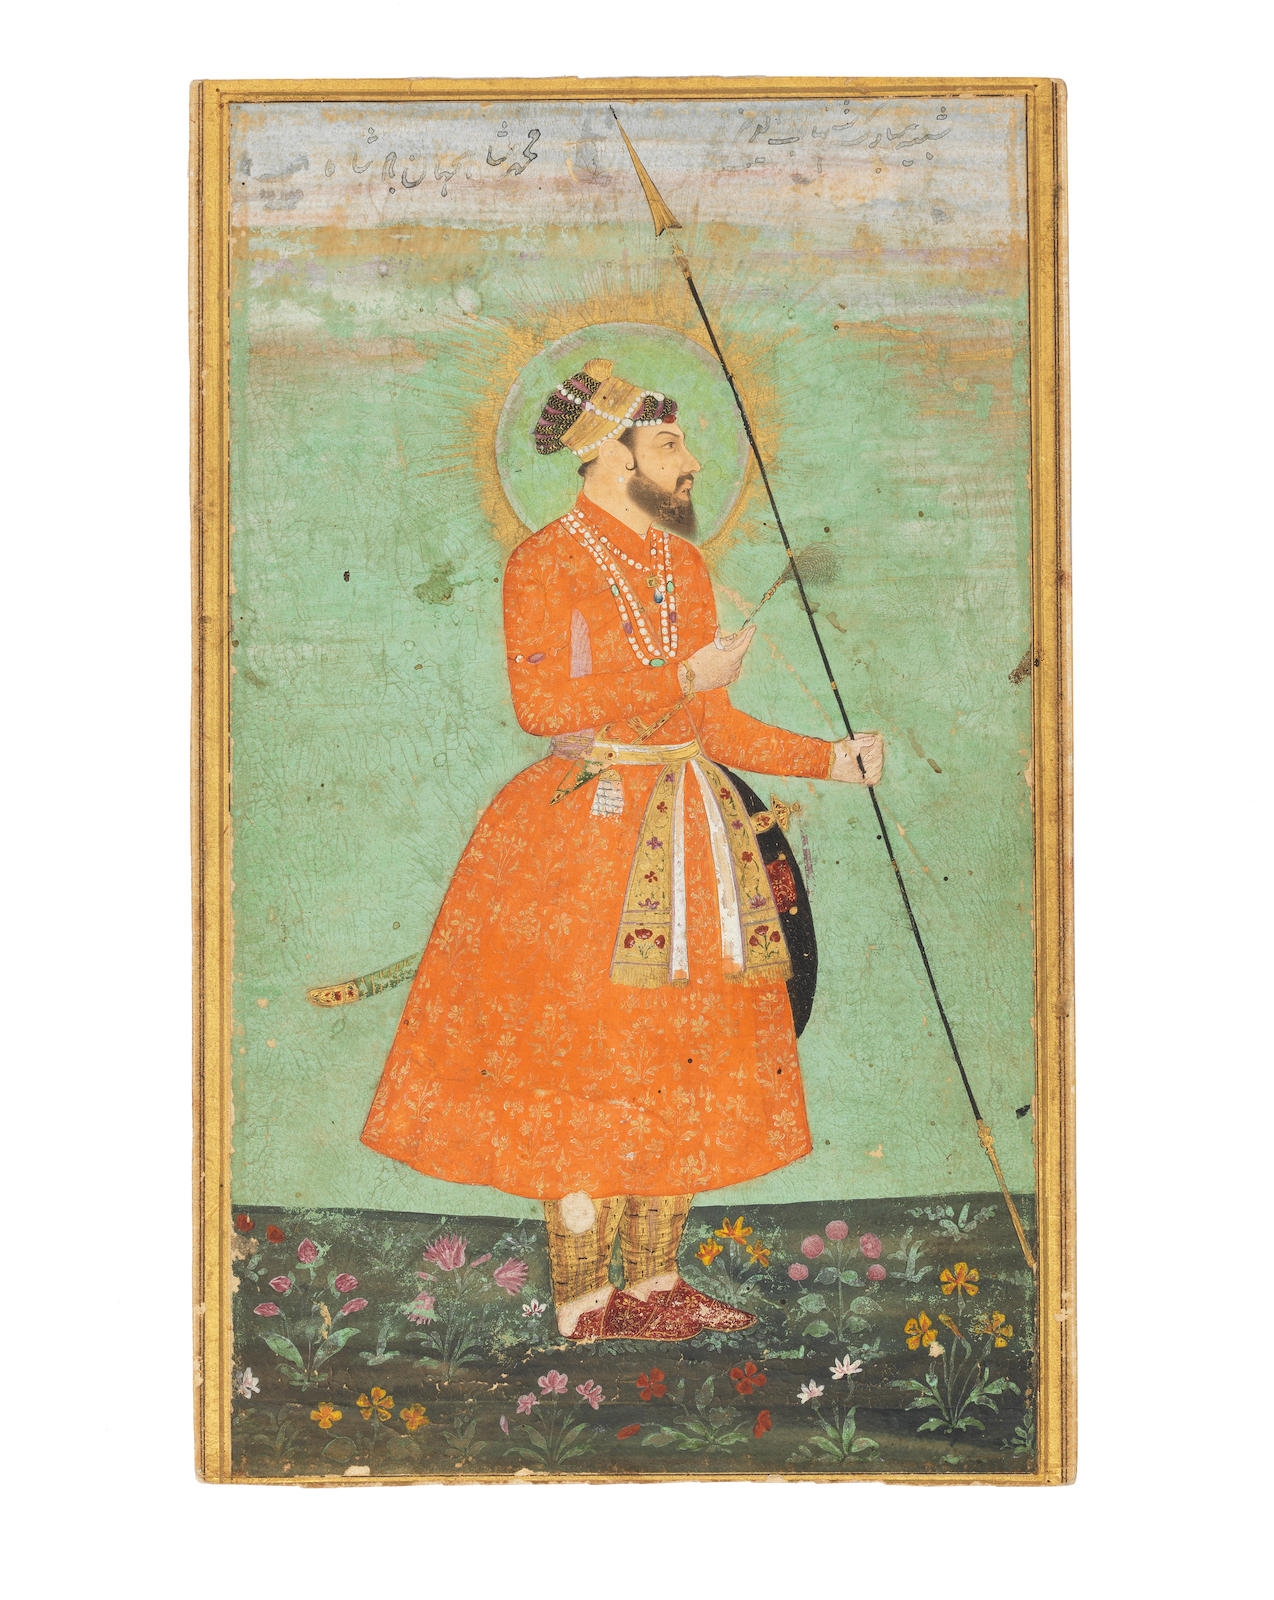 shah jahan the mughal emperor